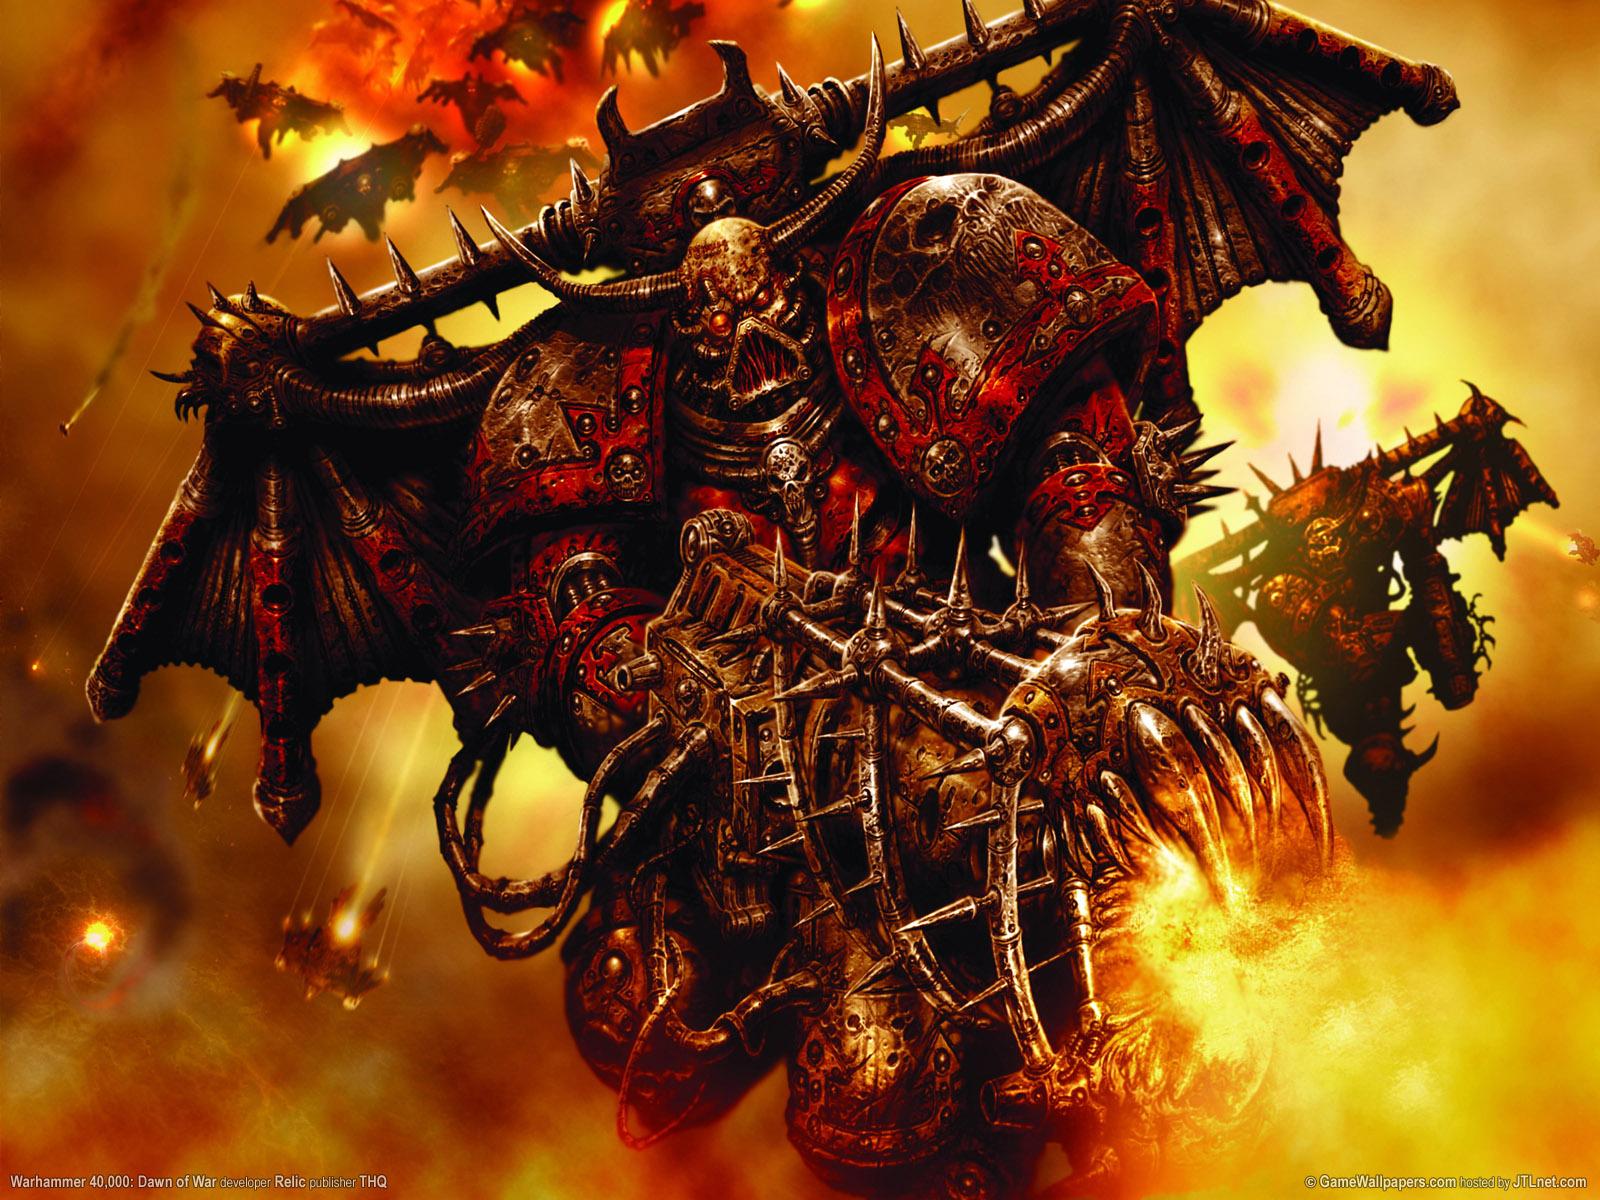 warhammer 40k wallpaper,cg artwork,demon,strategy video game,fictional character,warlord